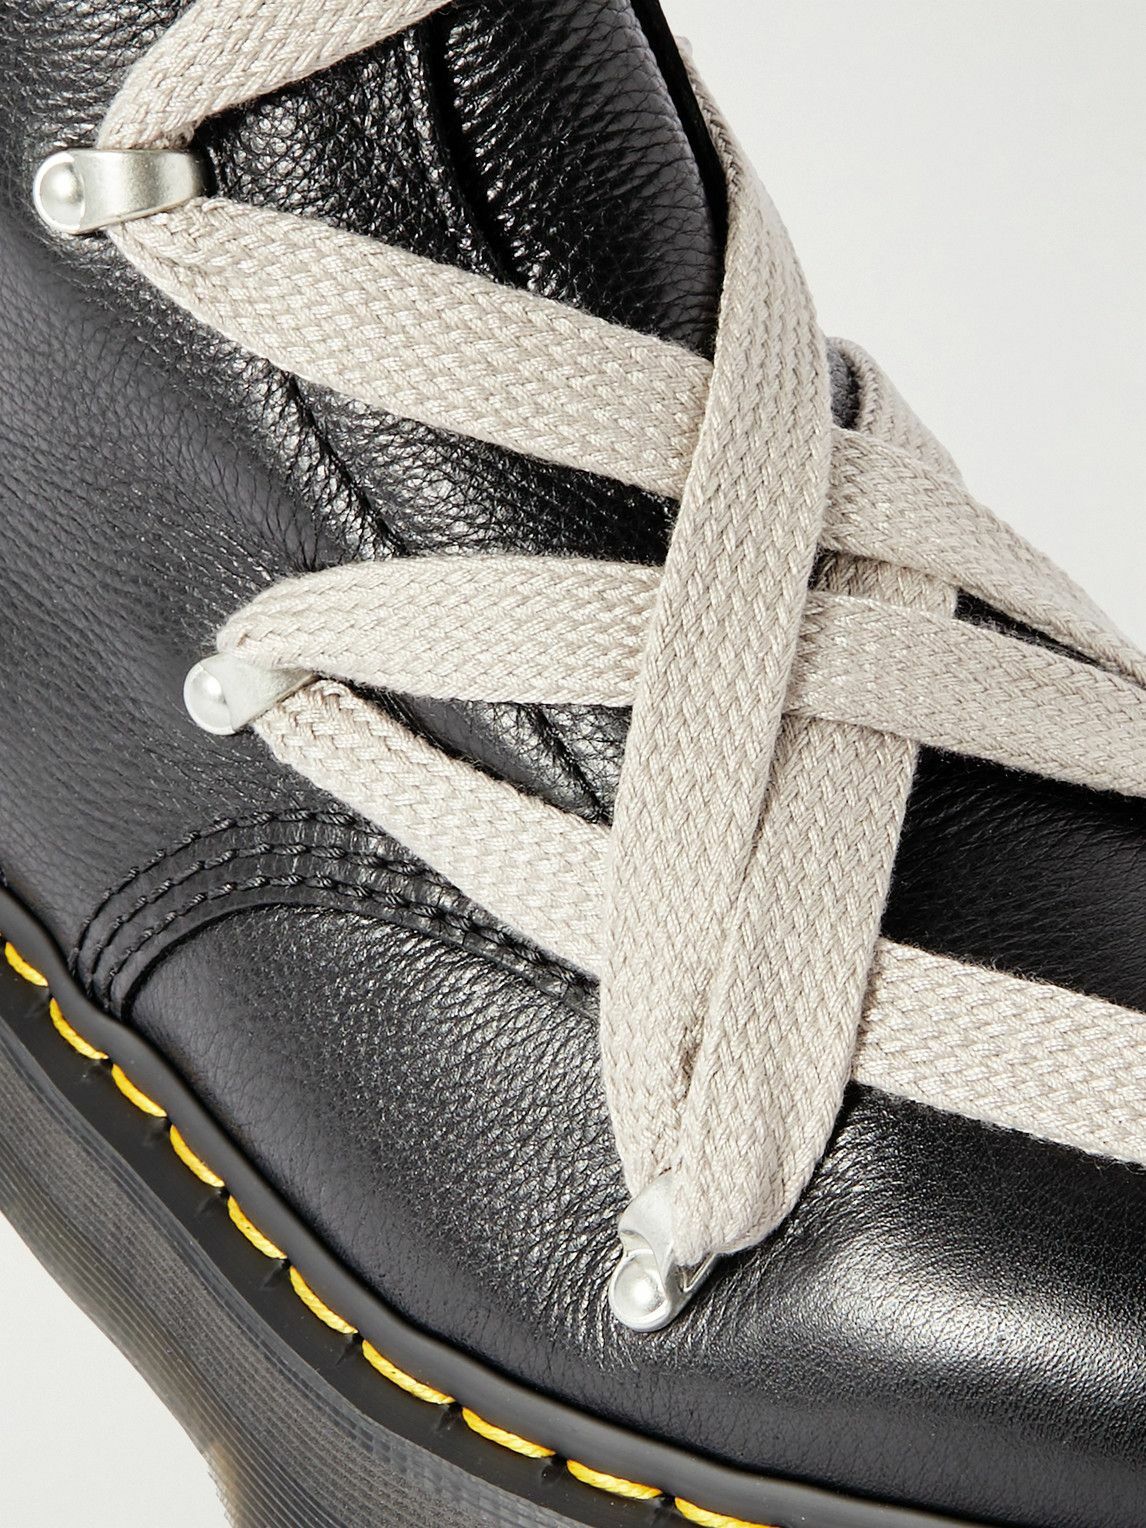 Rick Owens - Dr. Martens Full-Grain Leather Boots - Black